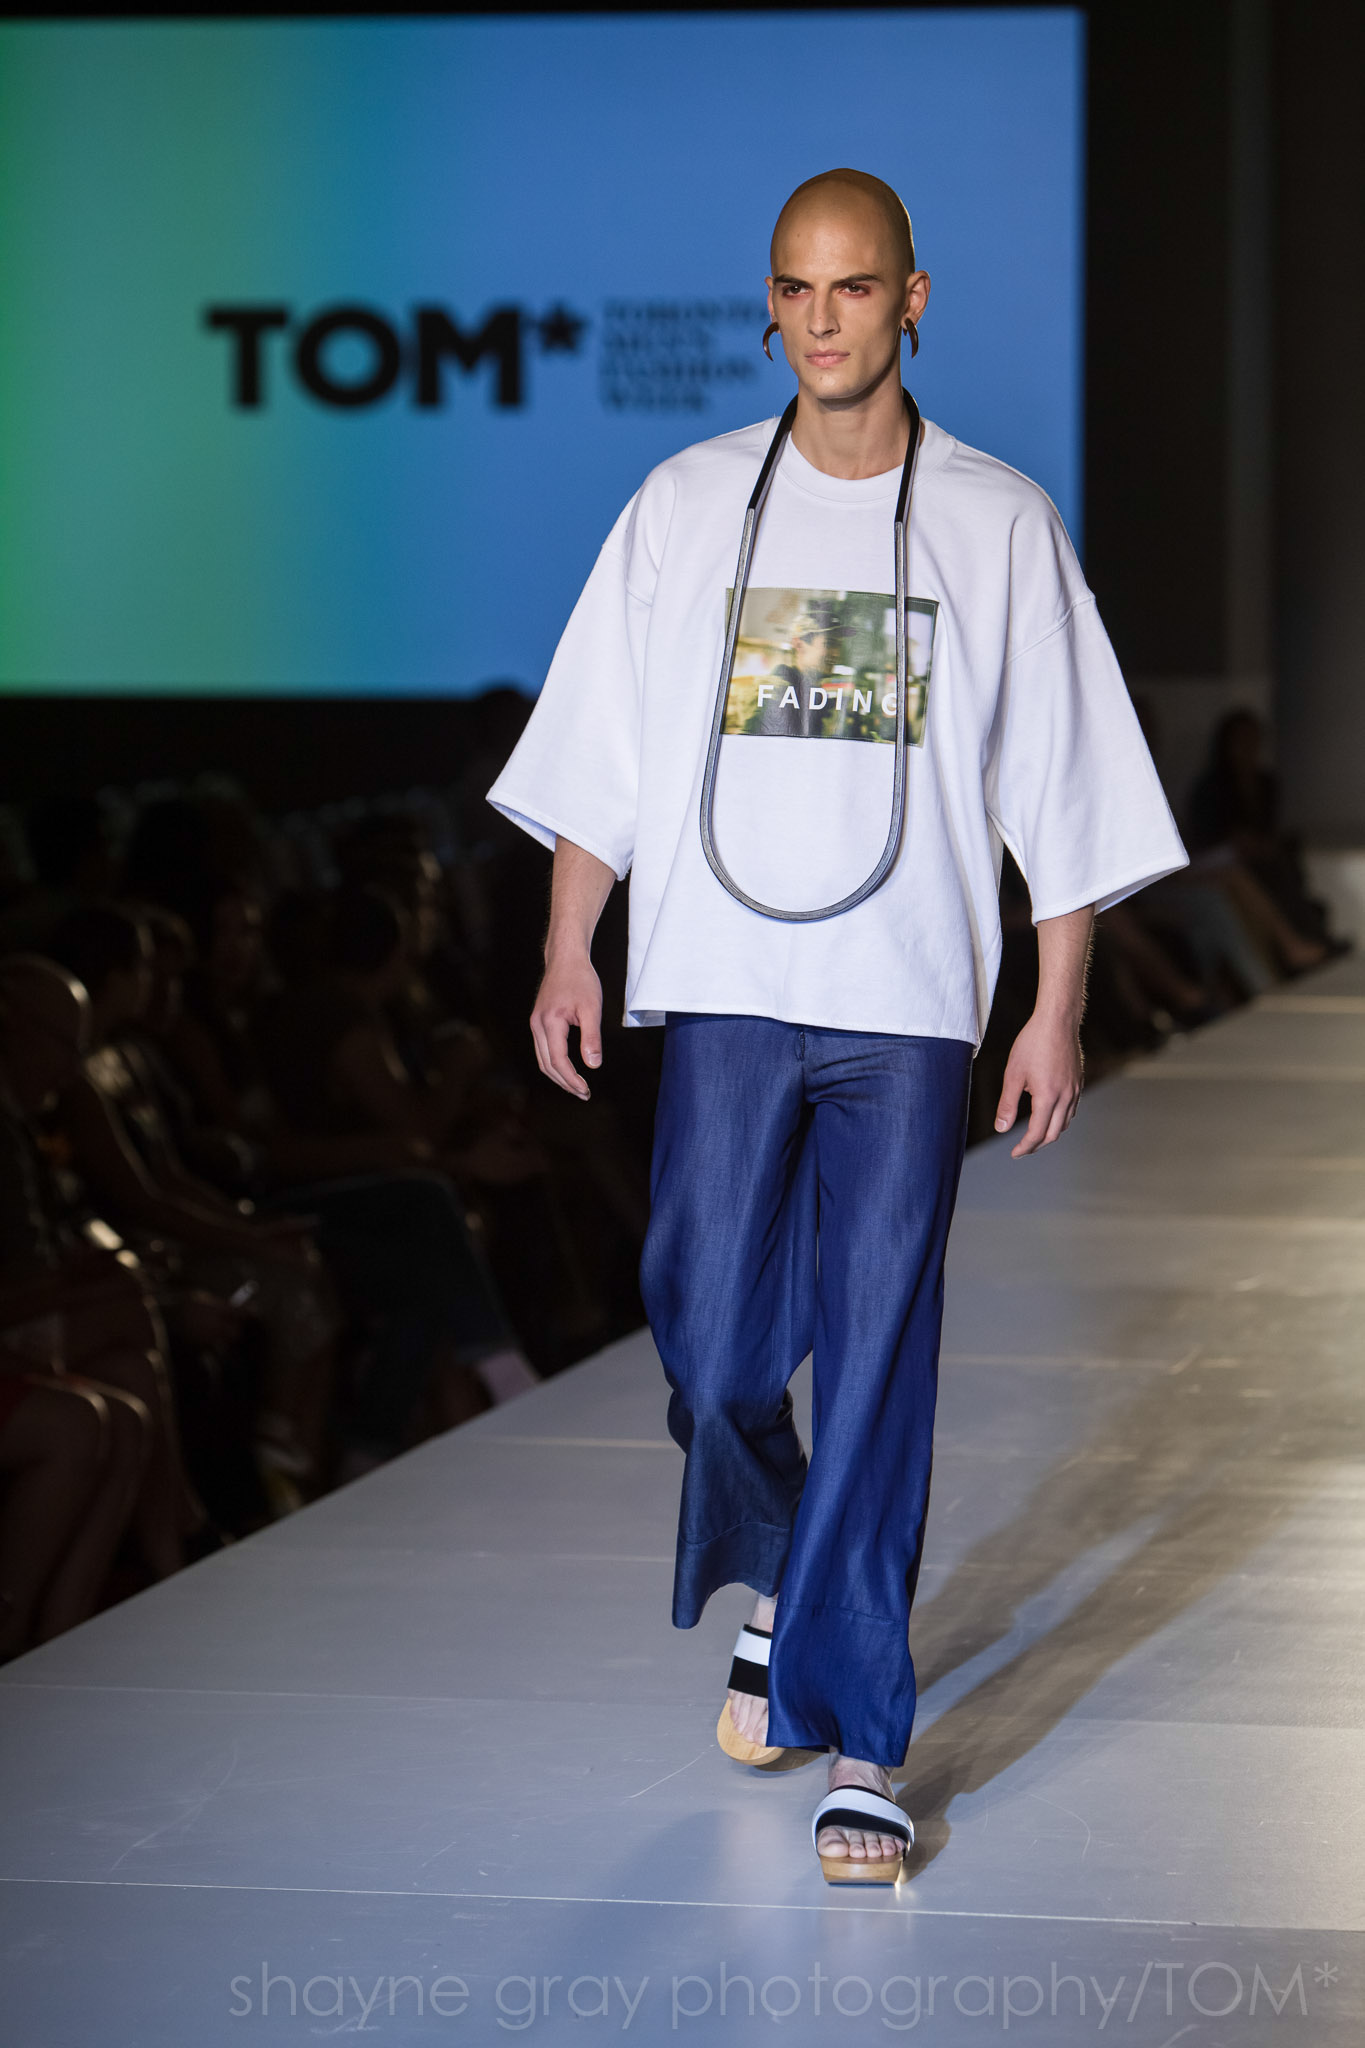 Shayne-Gray-Toronto-men's-fashion_week-TOM-wrkdept-8705.jpg